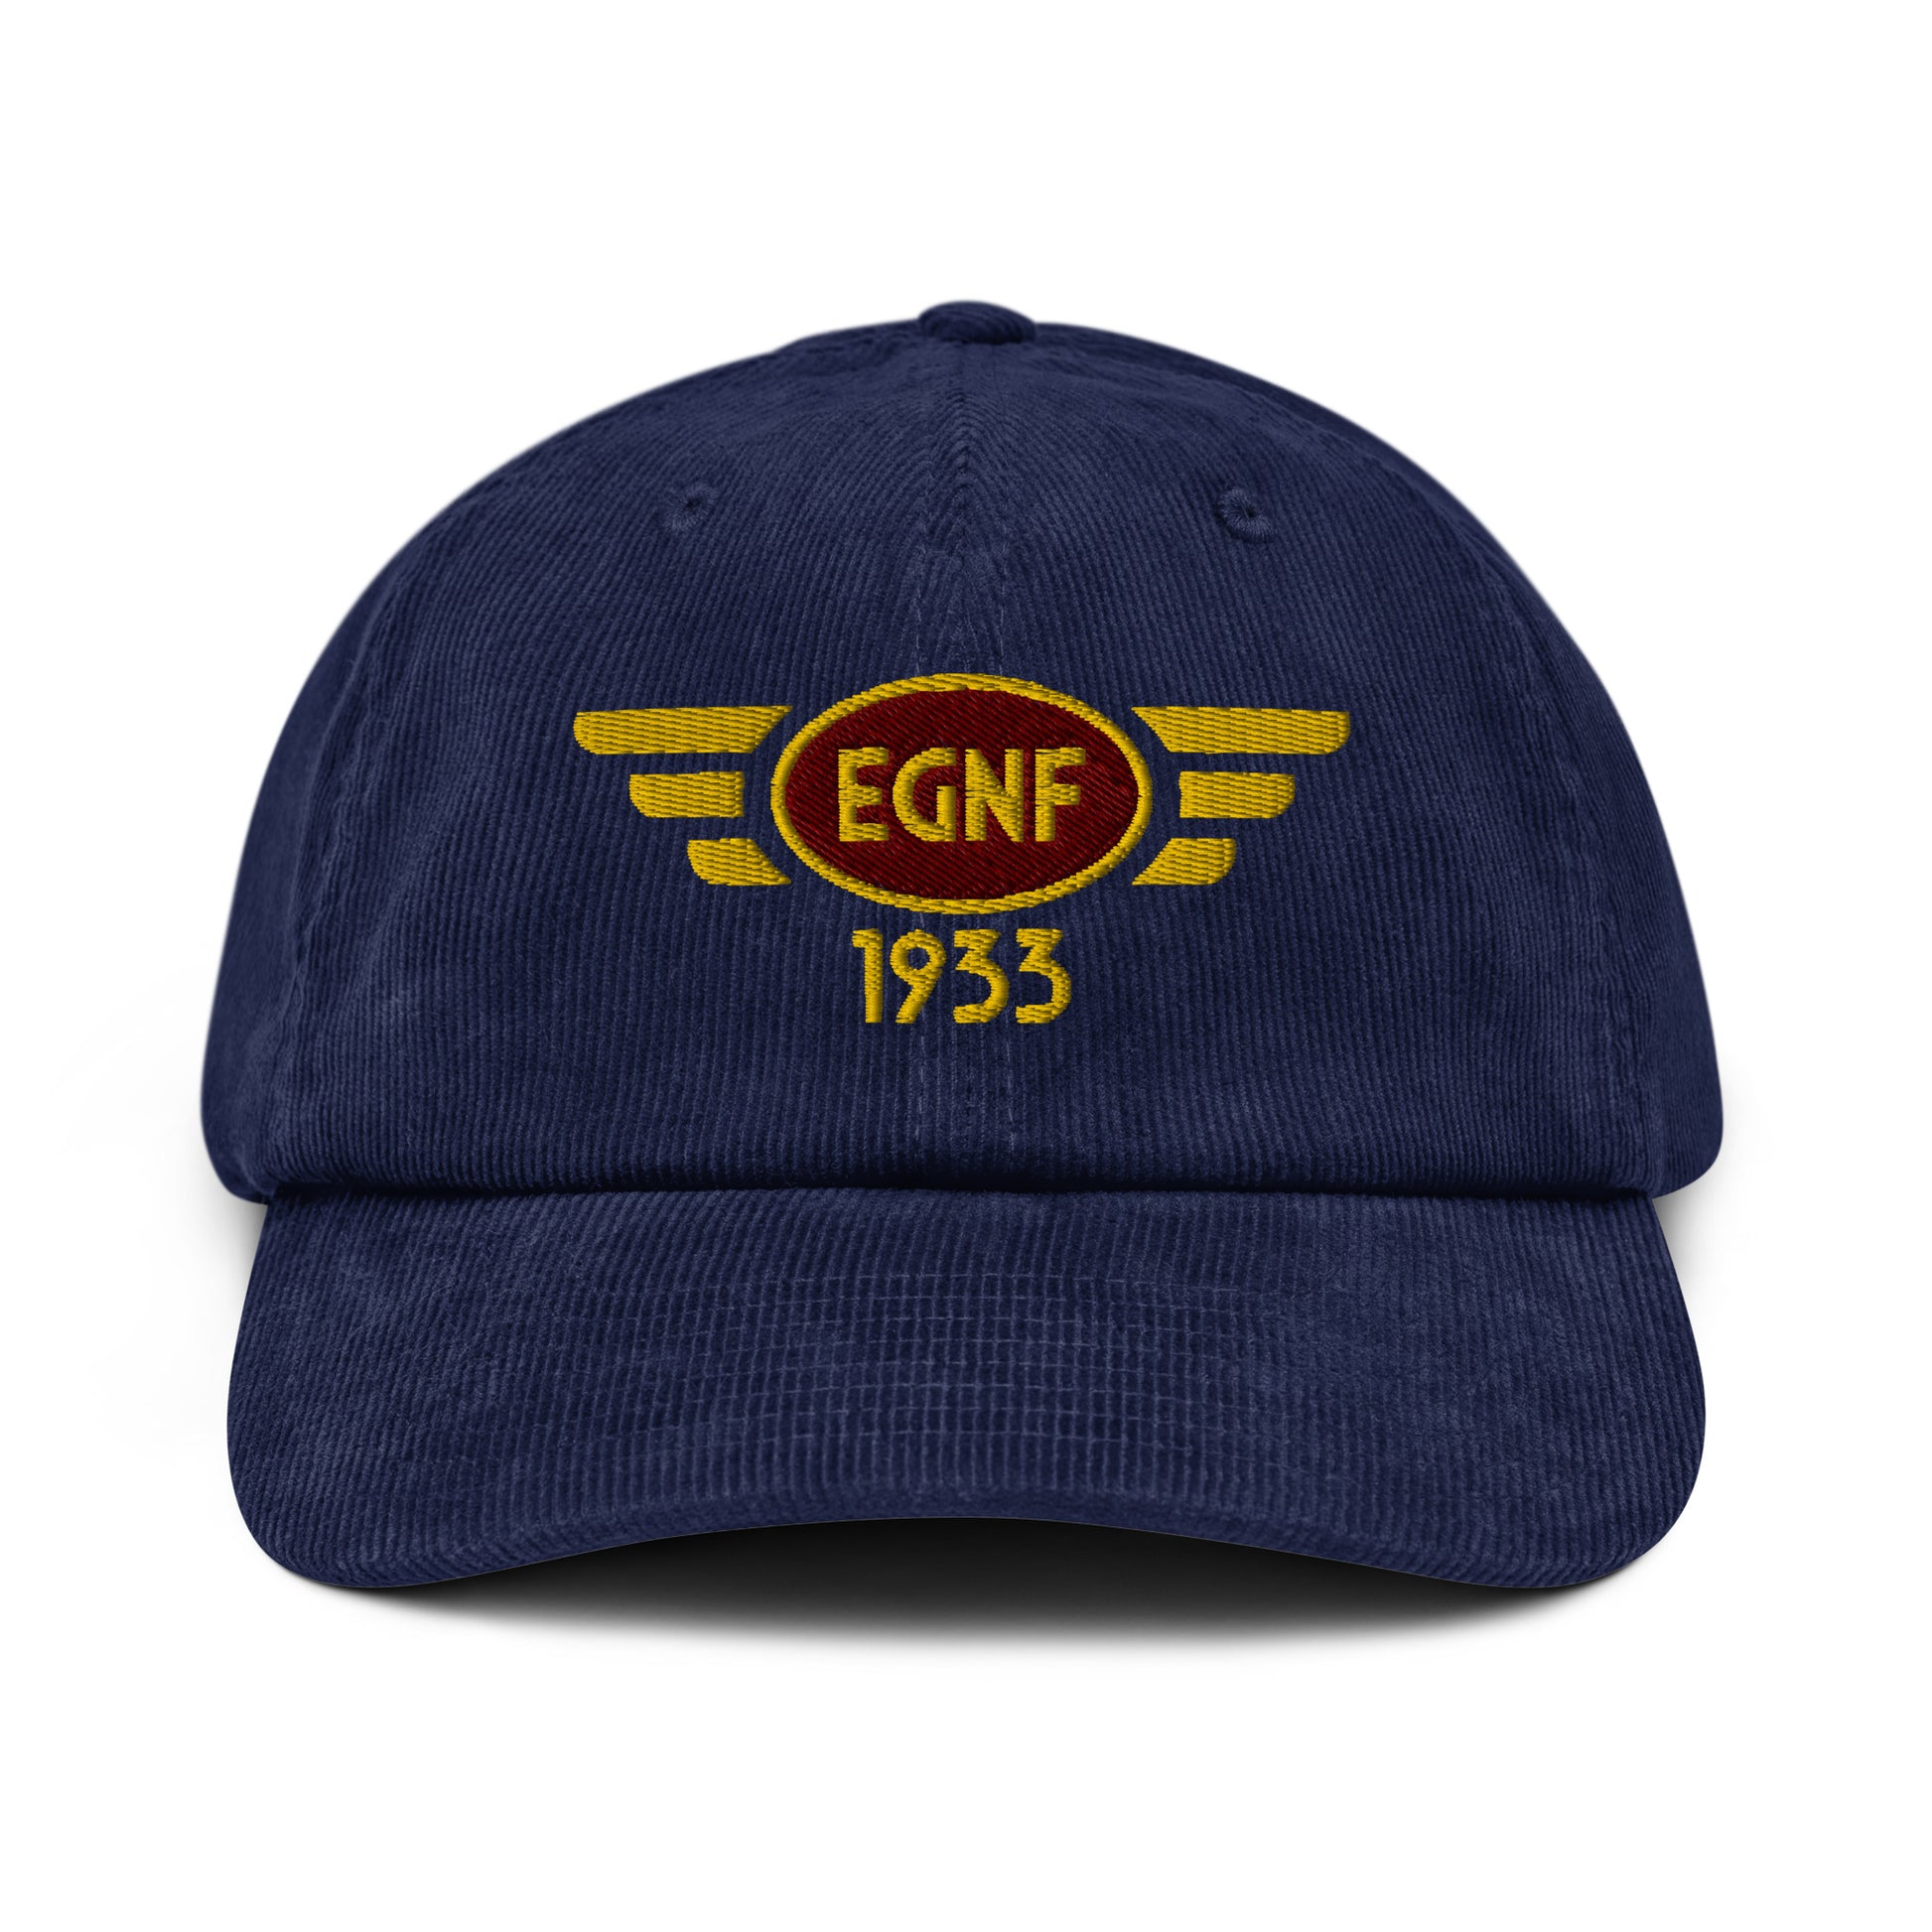 Oxford navy blue coloured corduroy baseball cap with embroidered vintage style aviation logo for Netherthorpe Aerodrome.